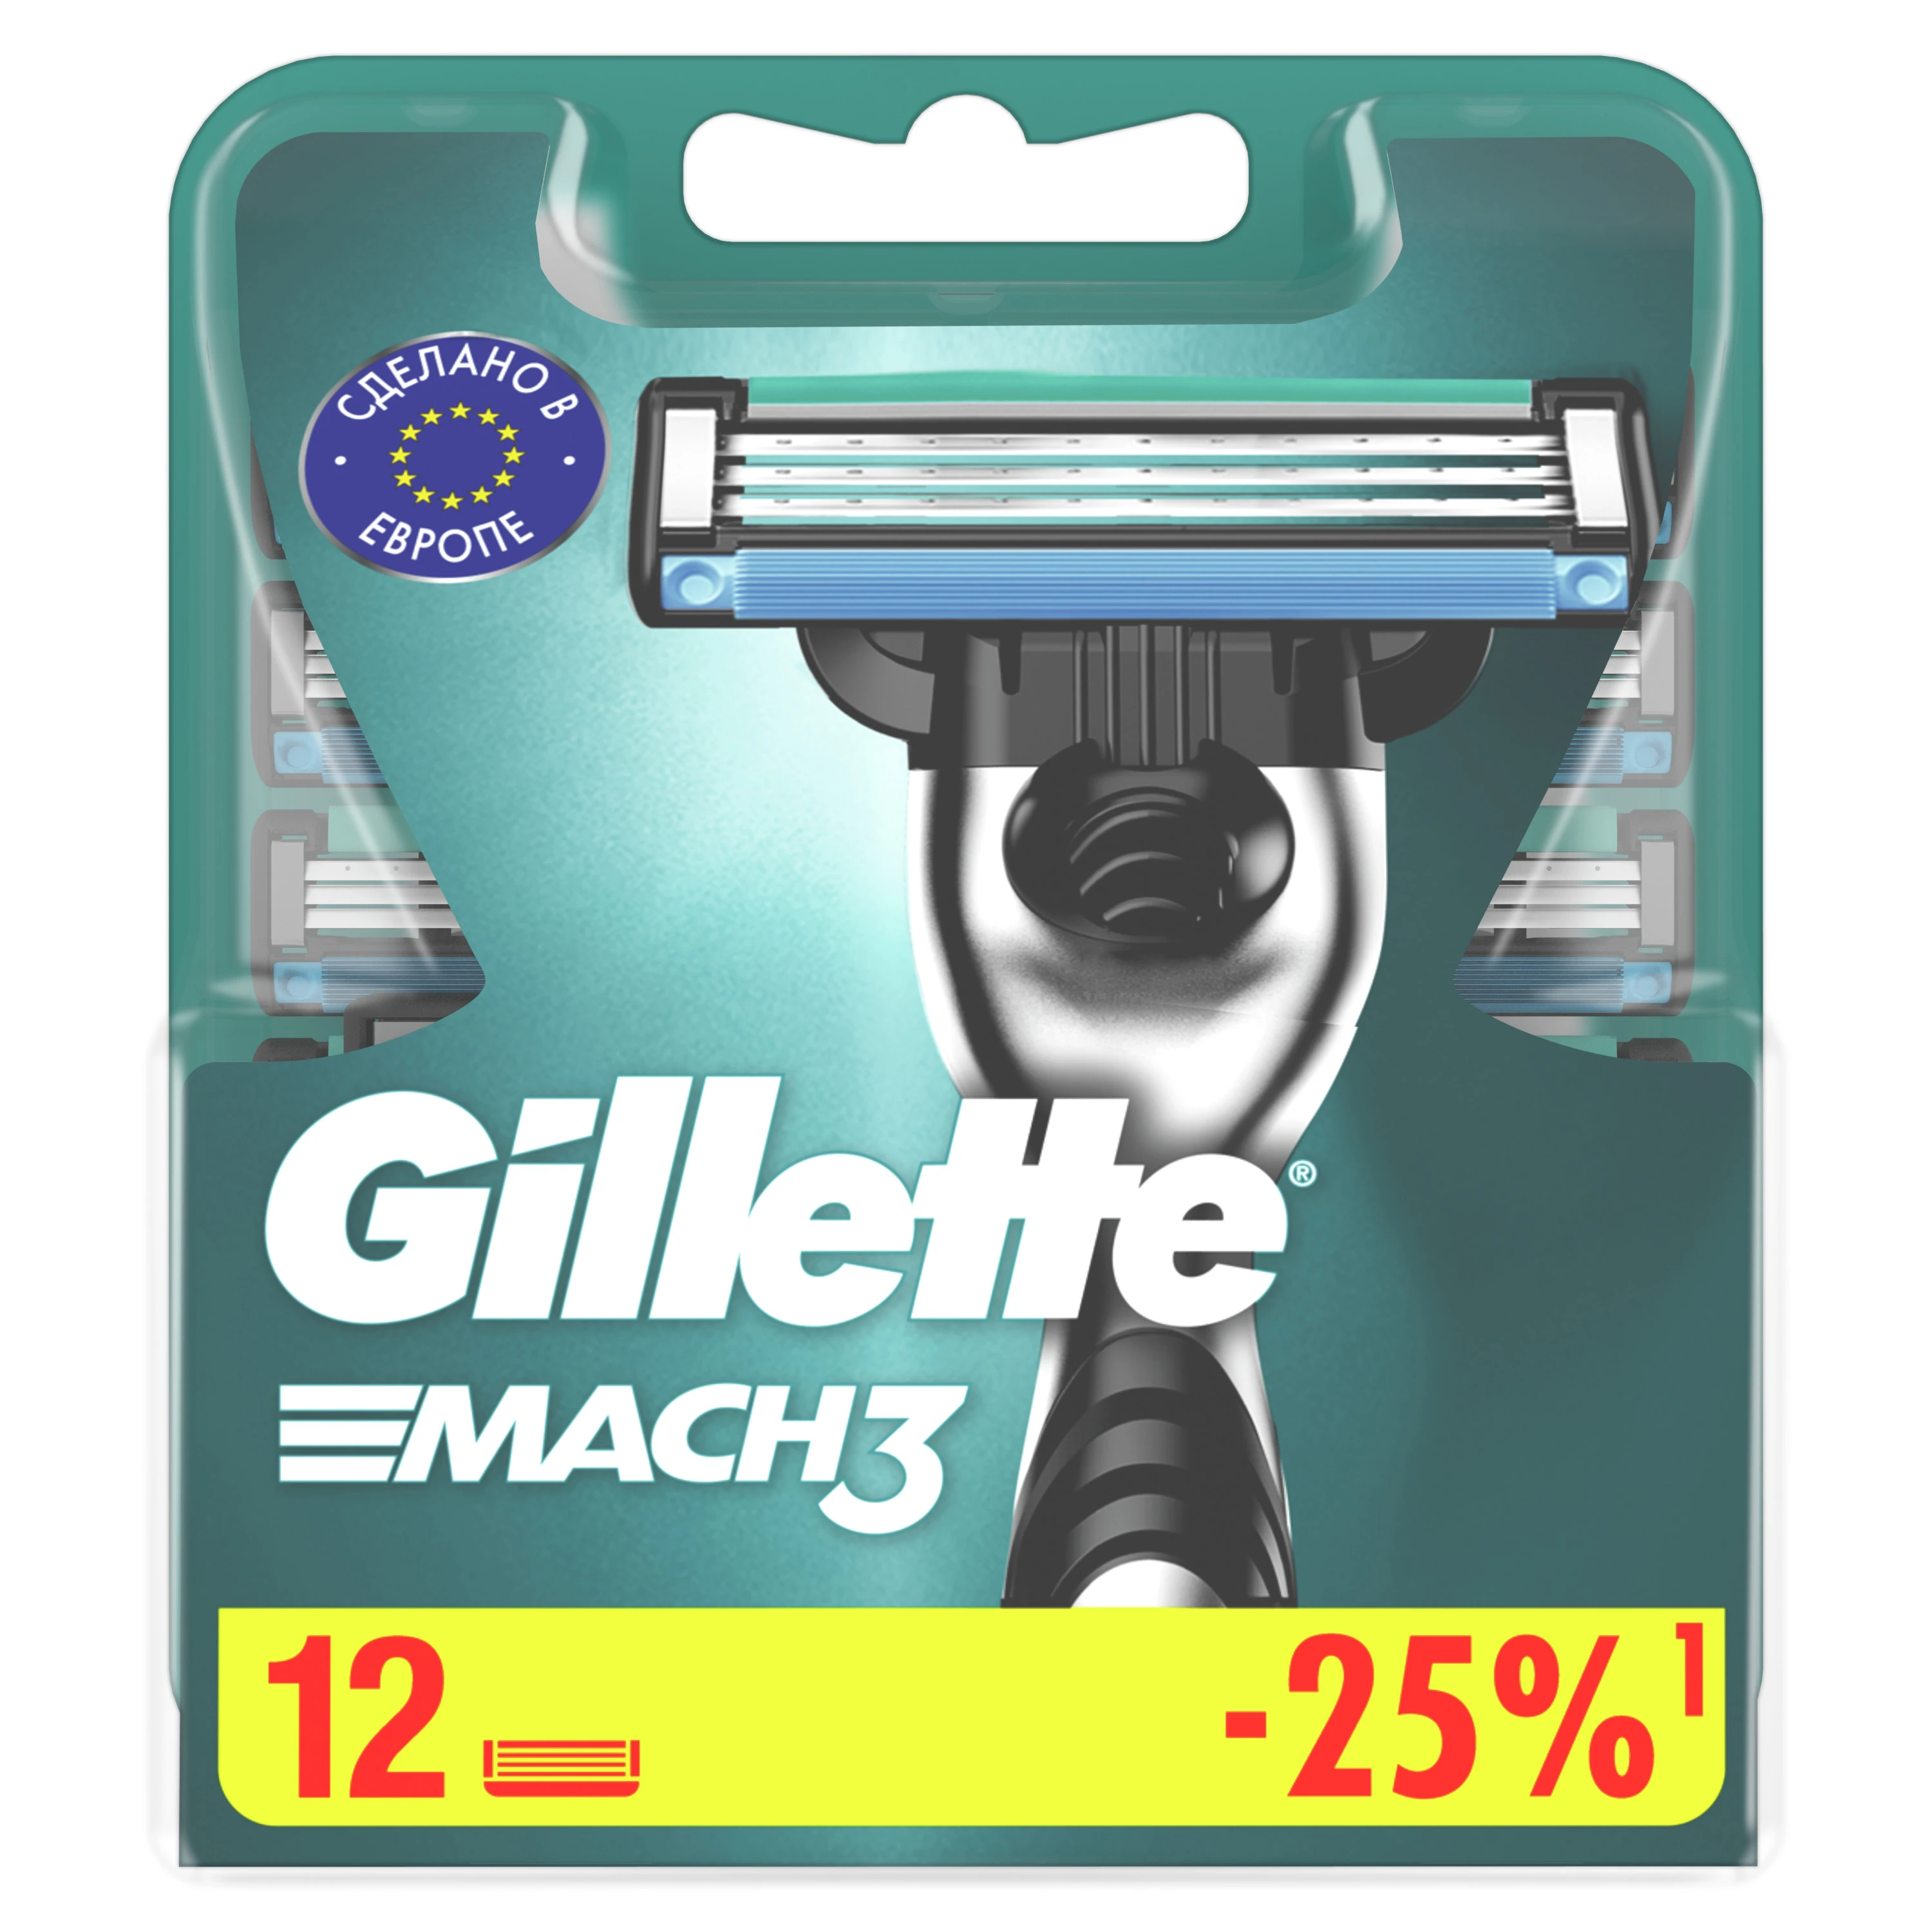 Replaceable Razor Blades for Men Gillette Mach 3 Blade shaving 12 pcs Cassettes Shaving  mak3 shaving cartridge mach3